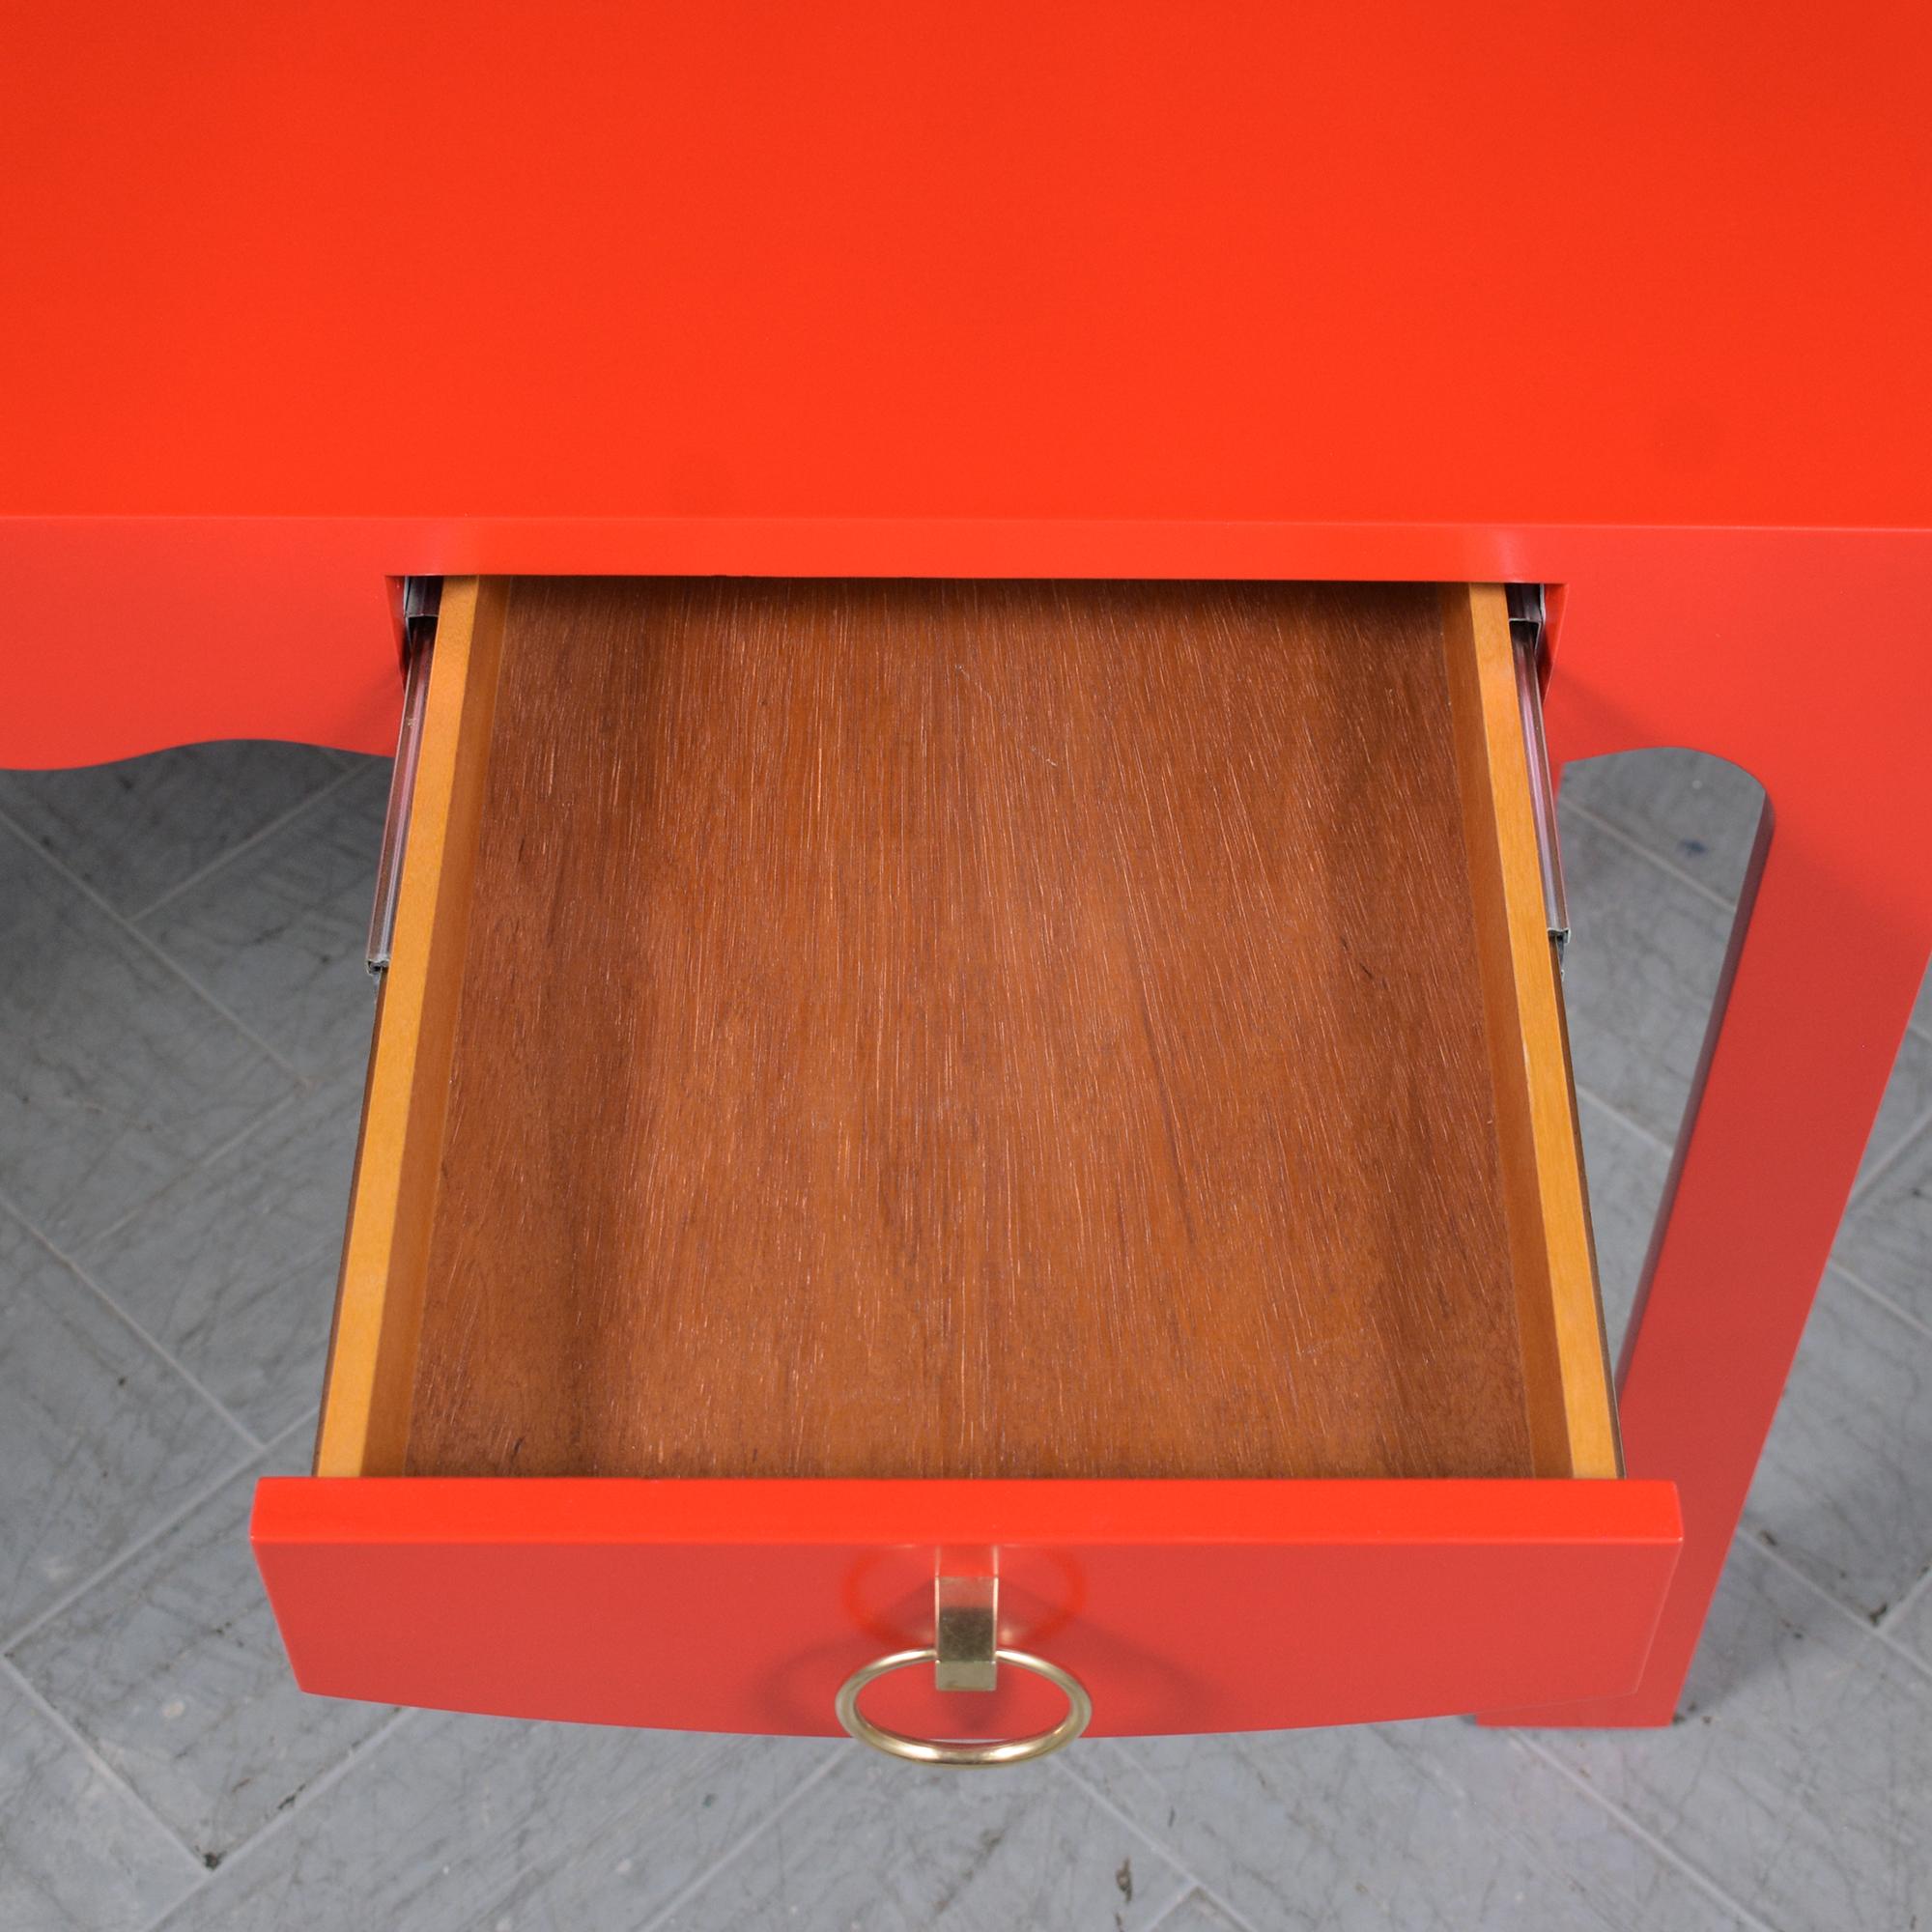 Carved Vintage Elegance Unleashed: Exquisite Mid-Century 1960s Handcrafted Wooden Desk